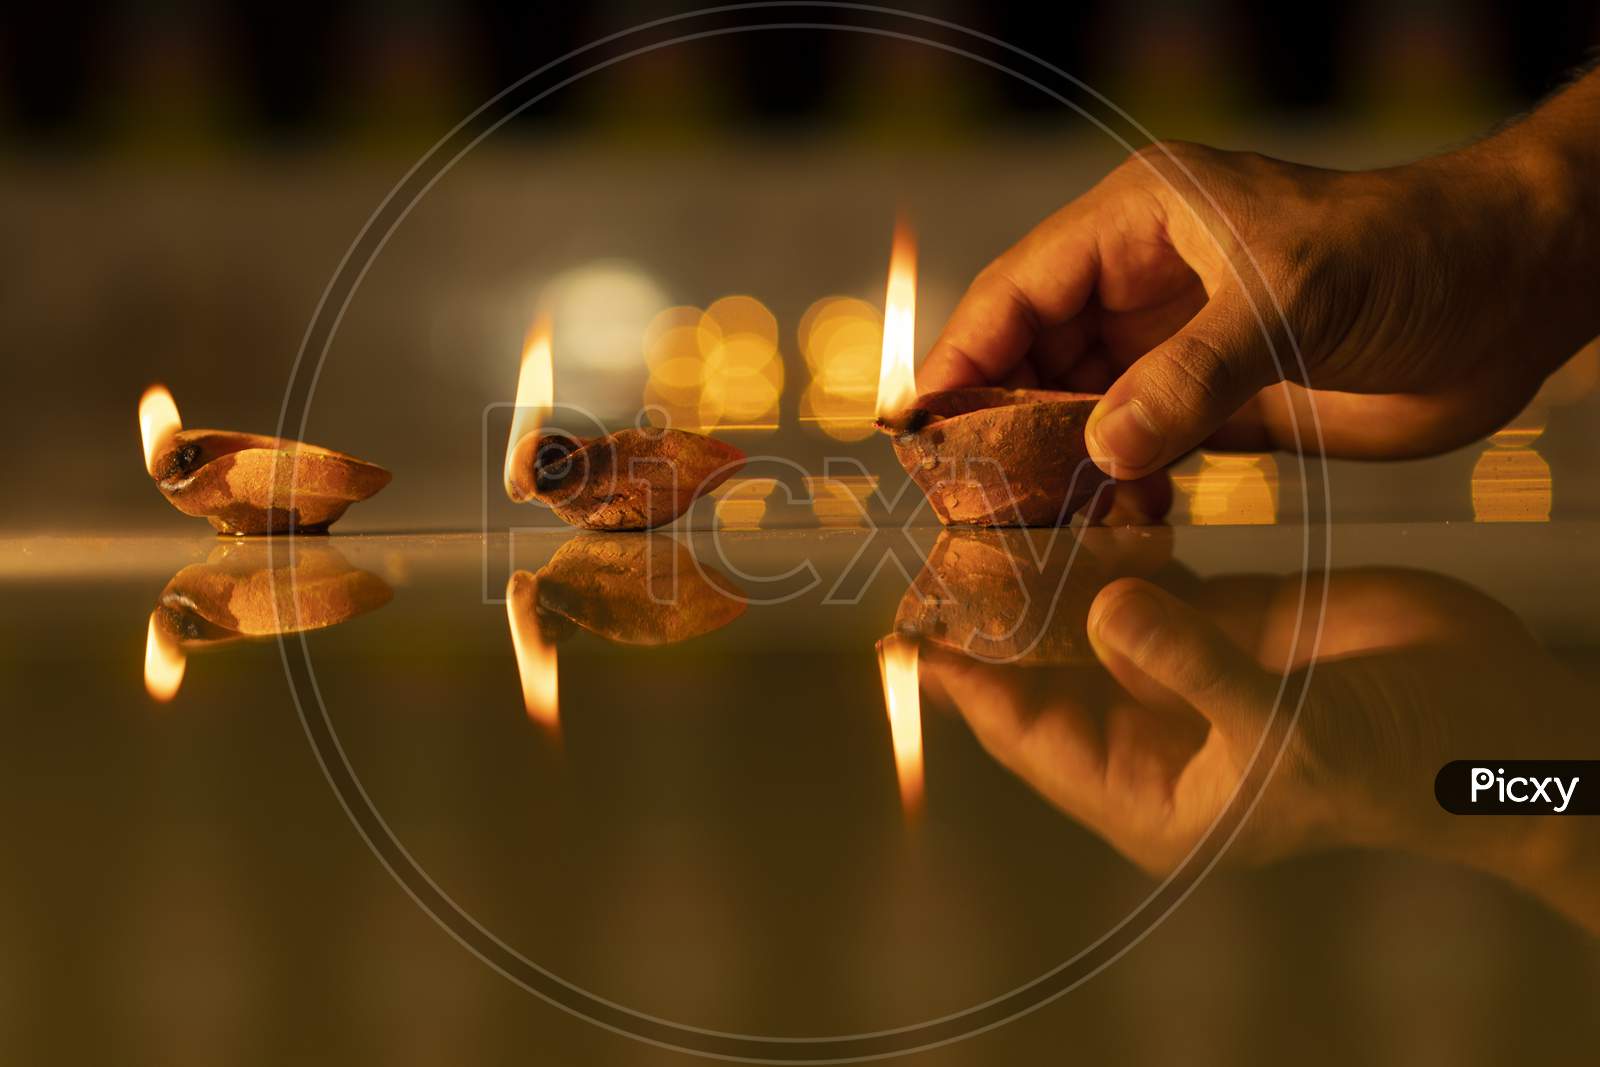 Diwali Pradip on hand With Bokeh Light Background